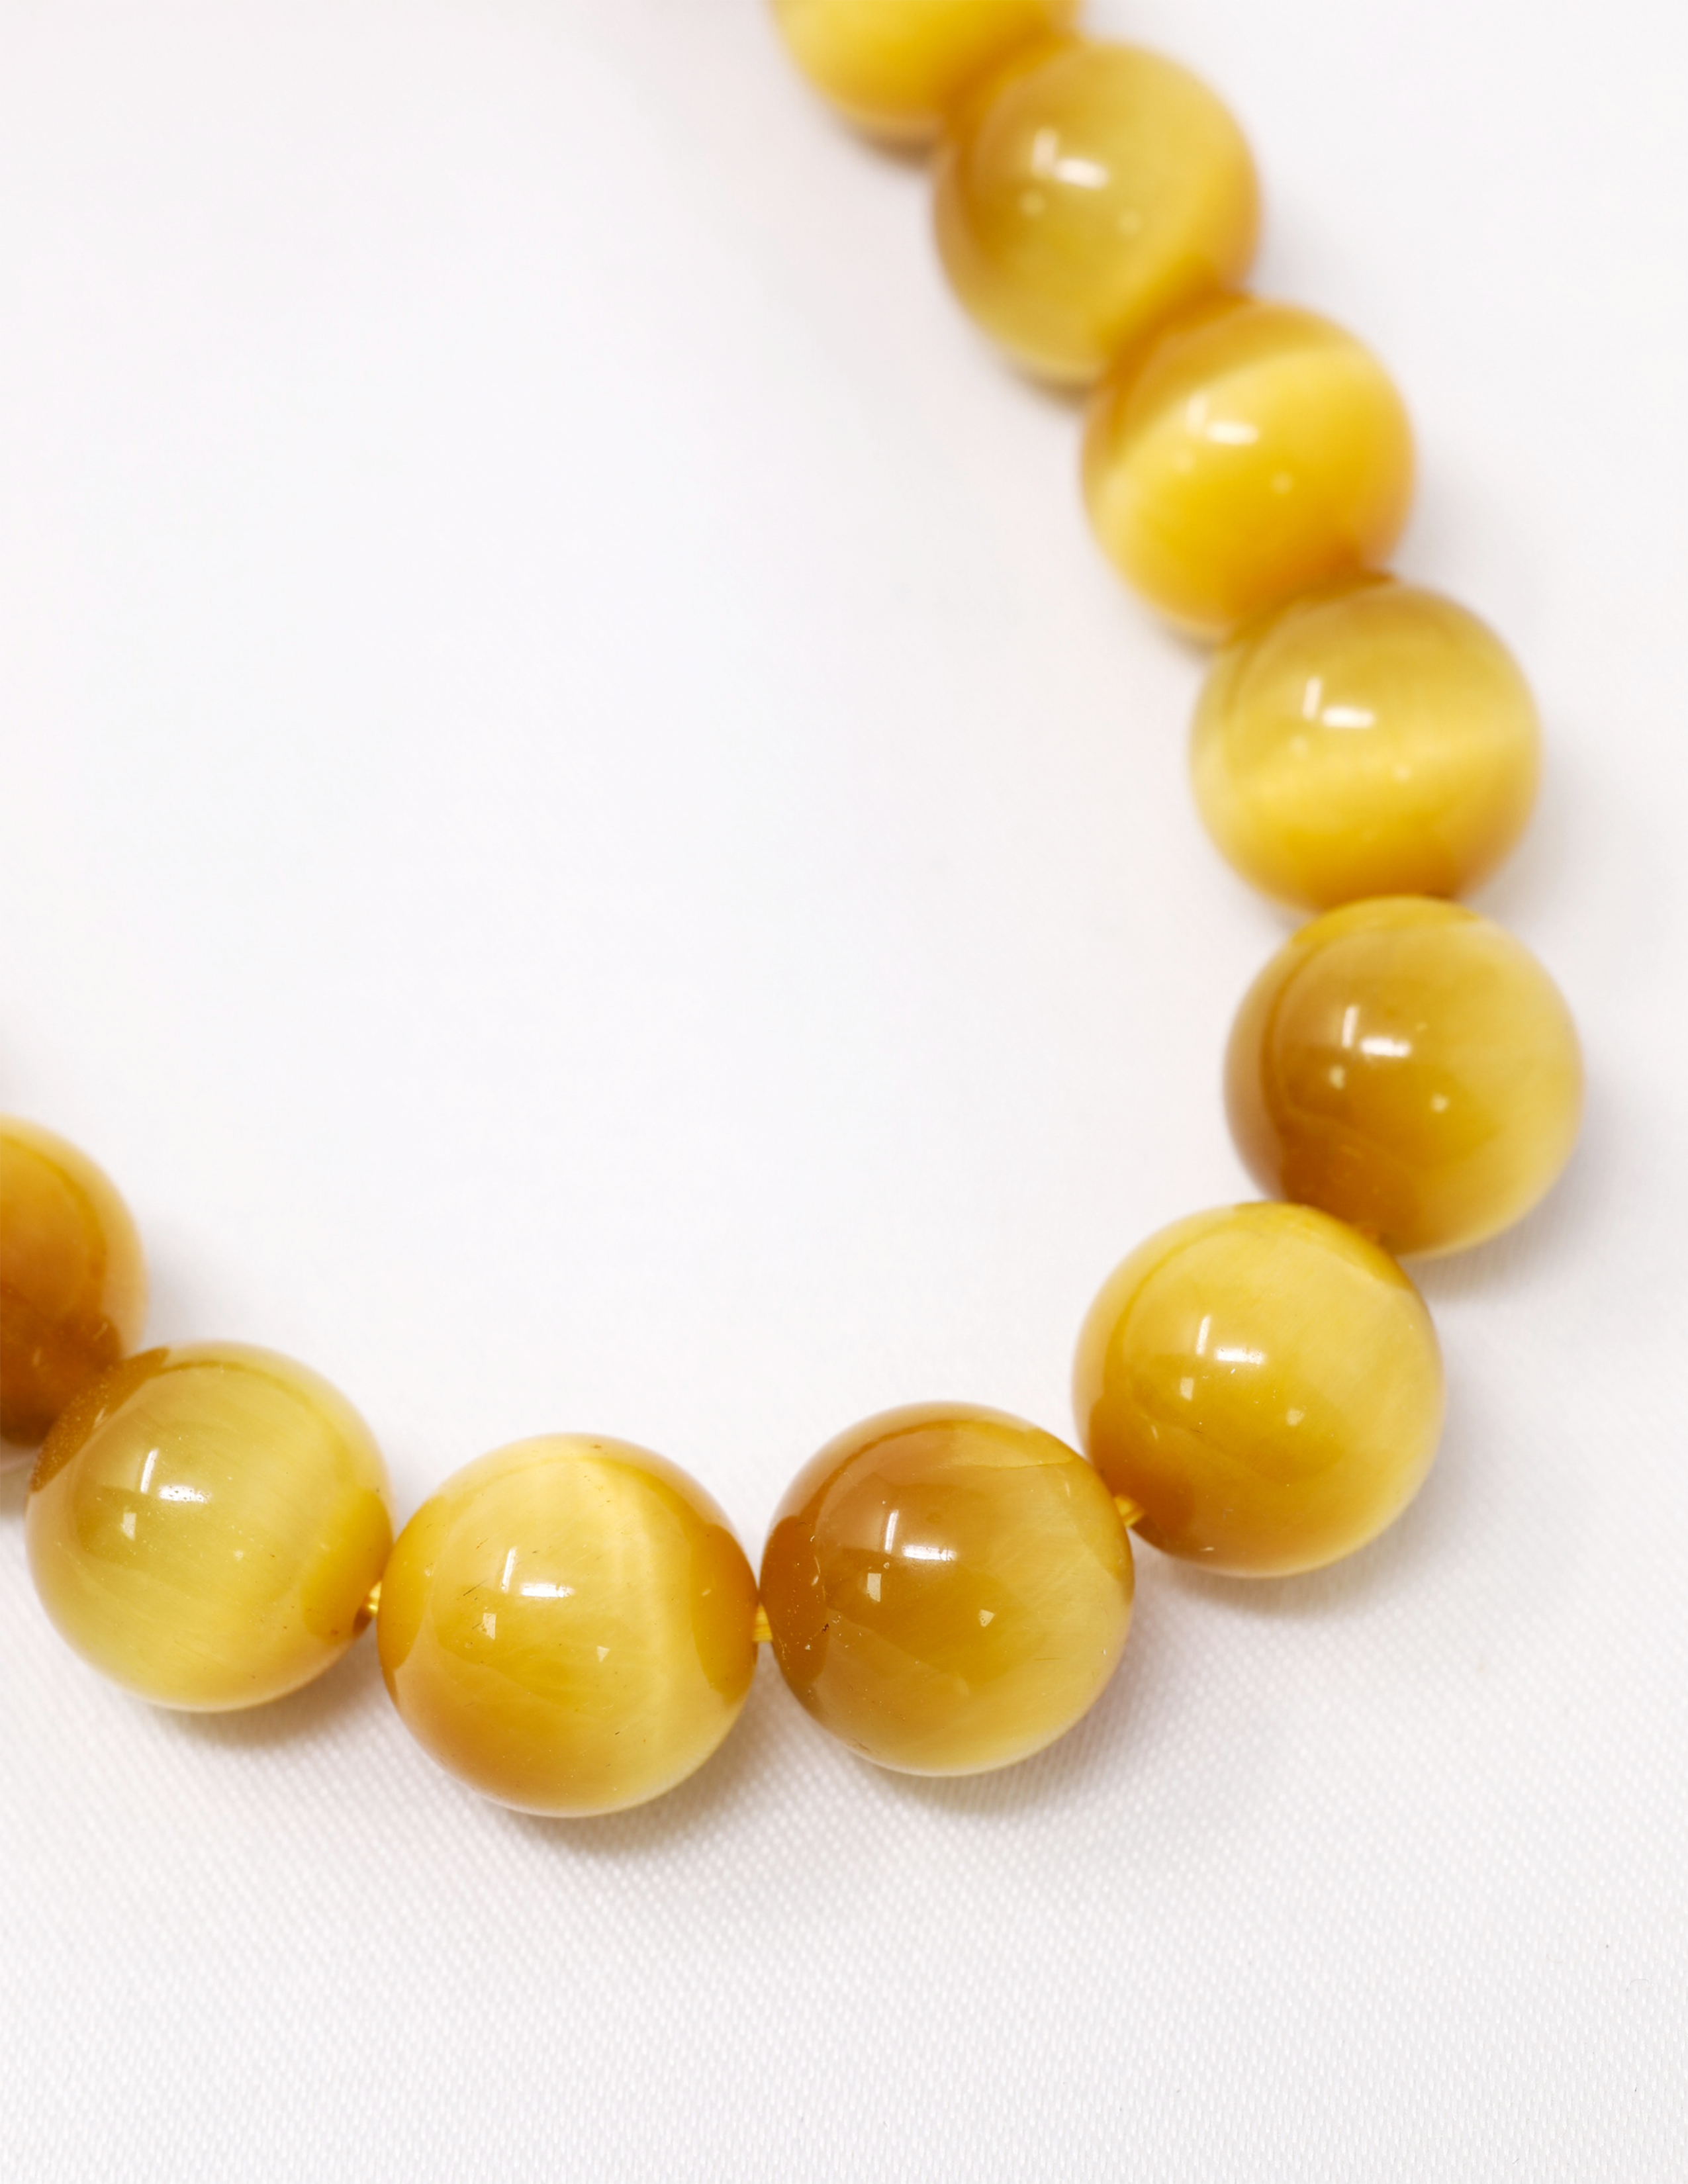 Yellow Jade Crystal Bracelet